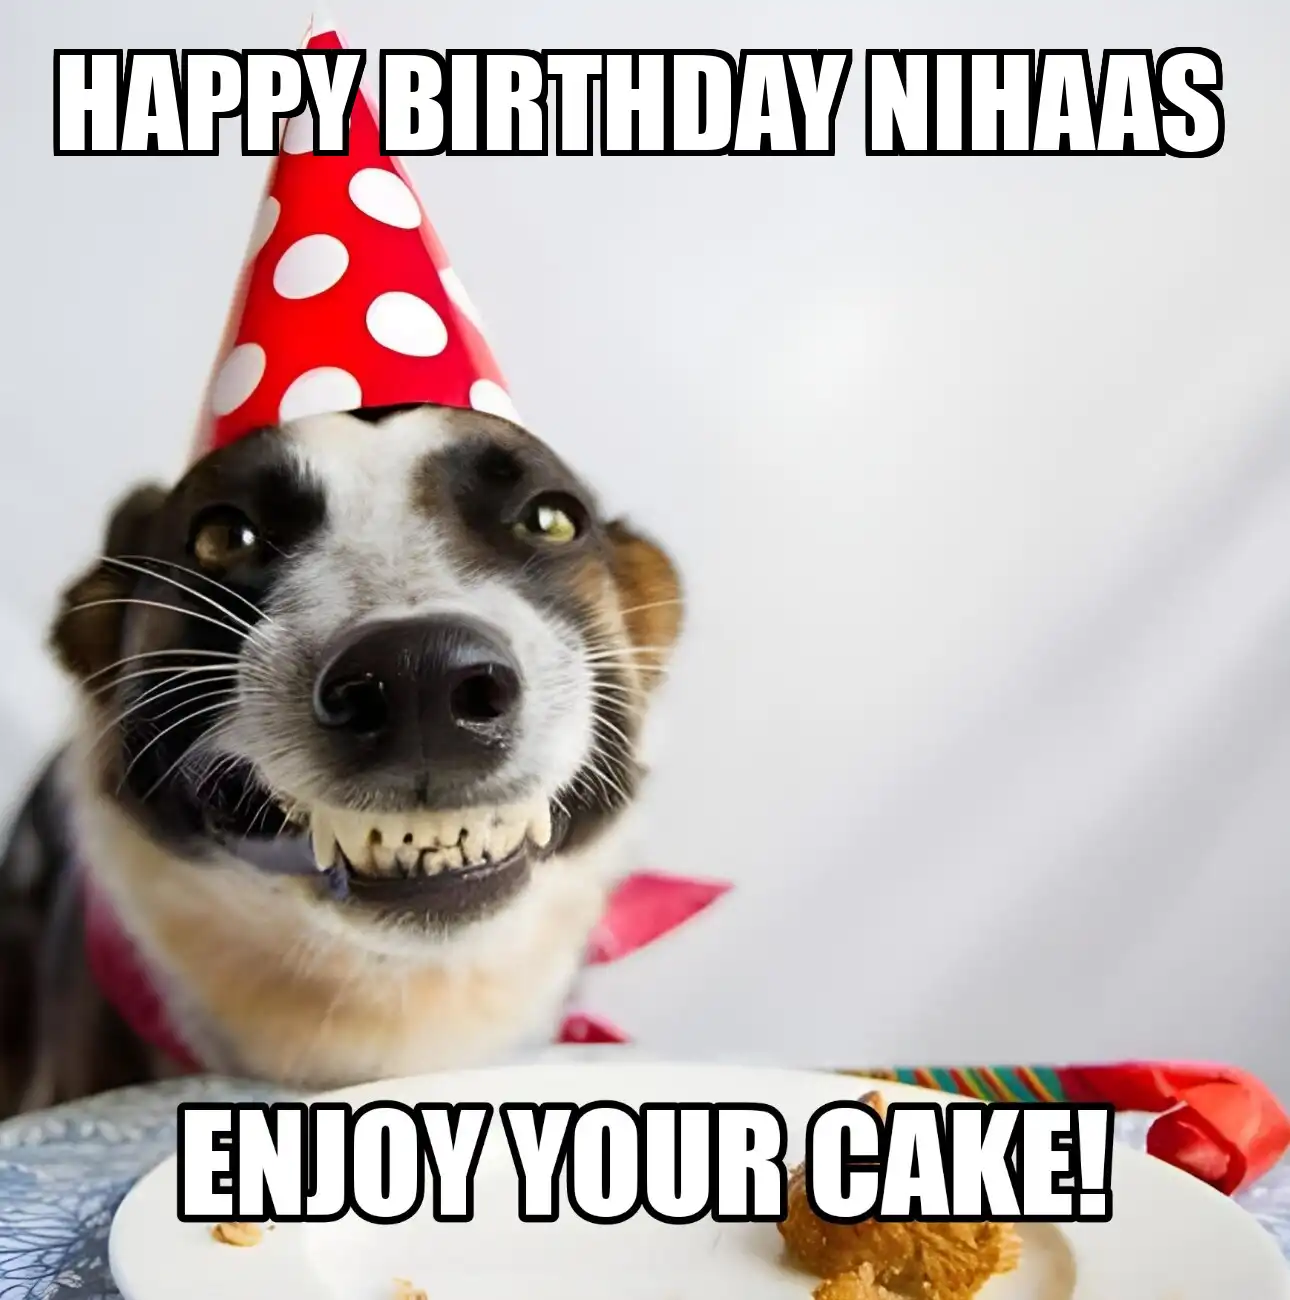 Happy Birthday Nihaas Enjoy Your Cake Dog Meme